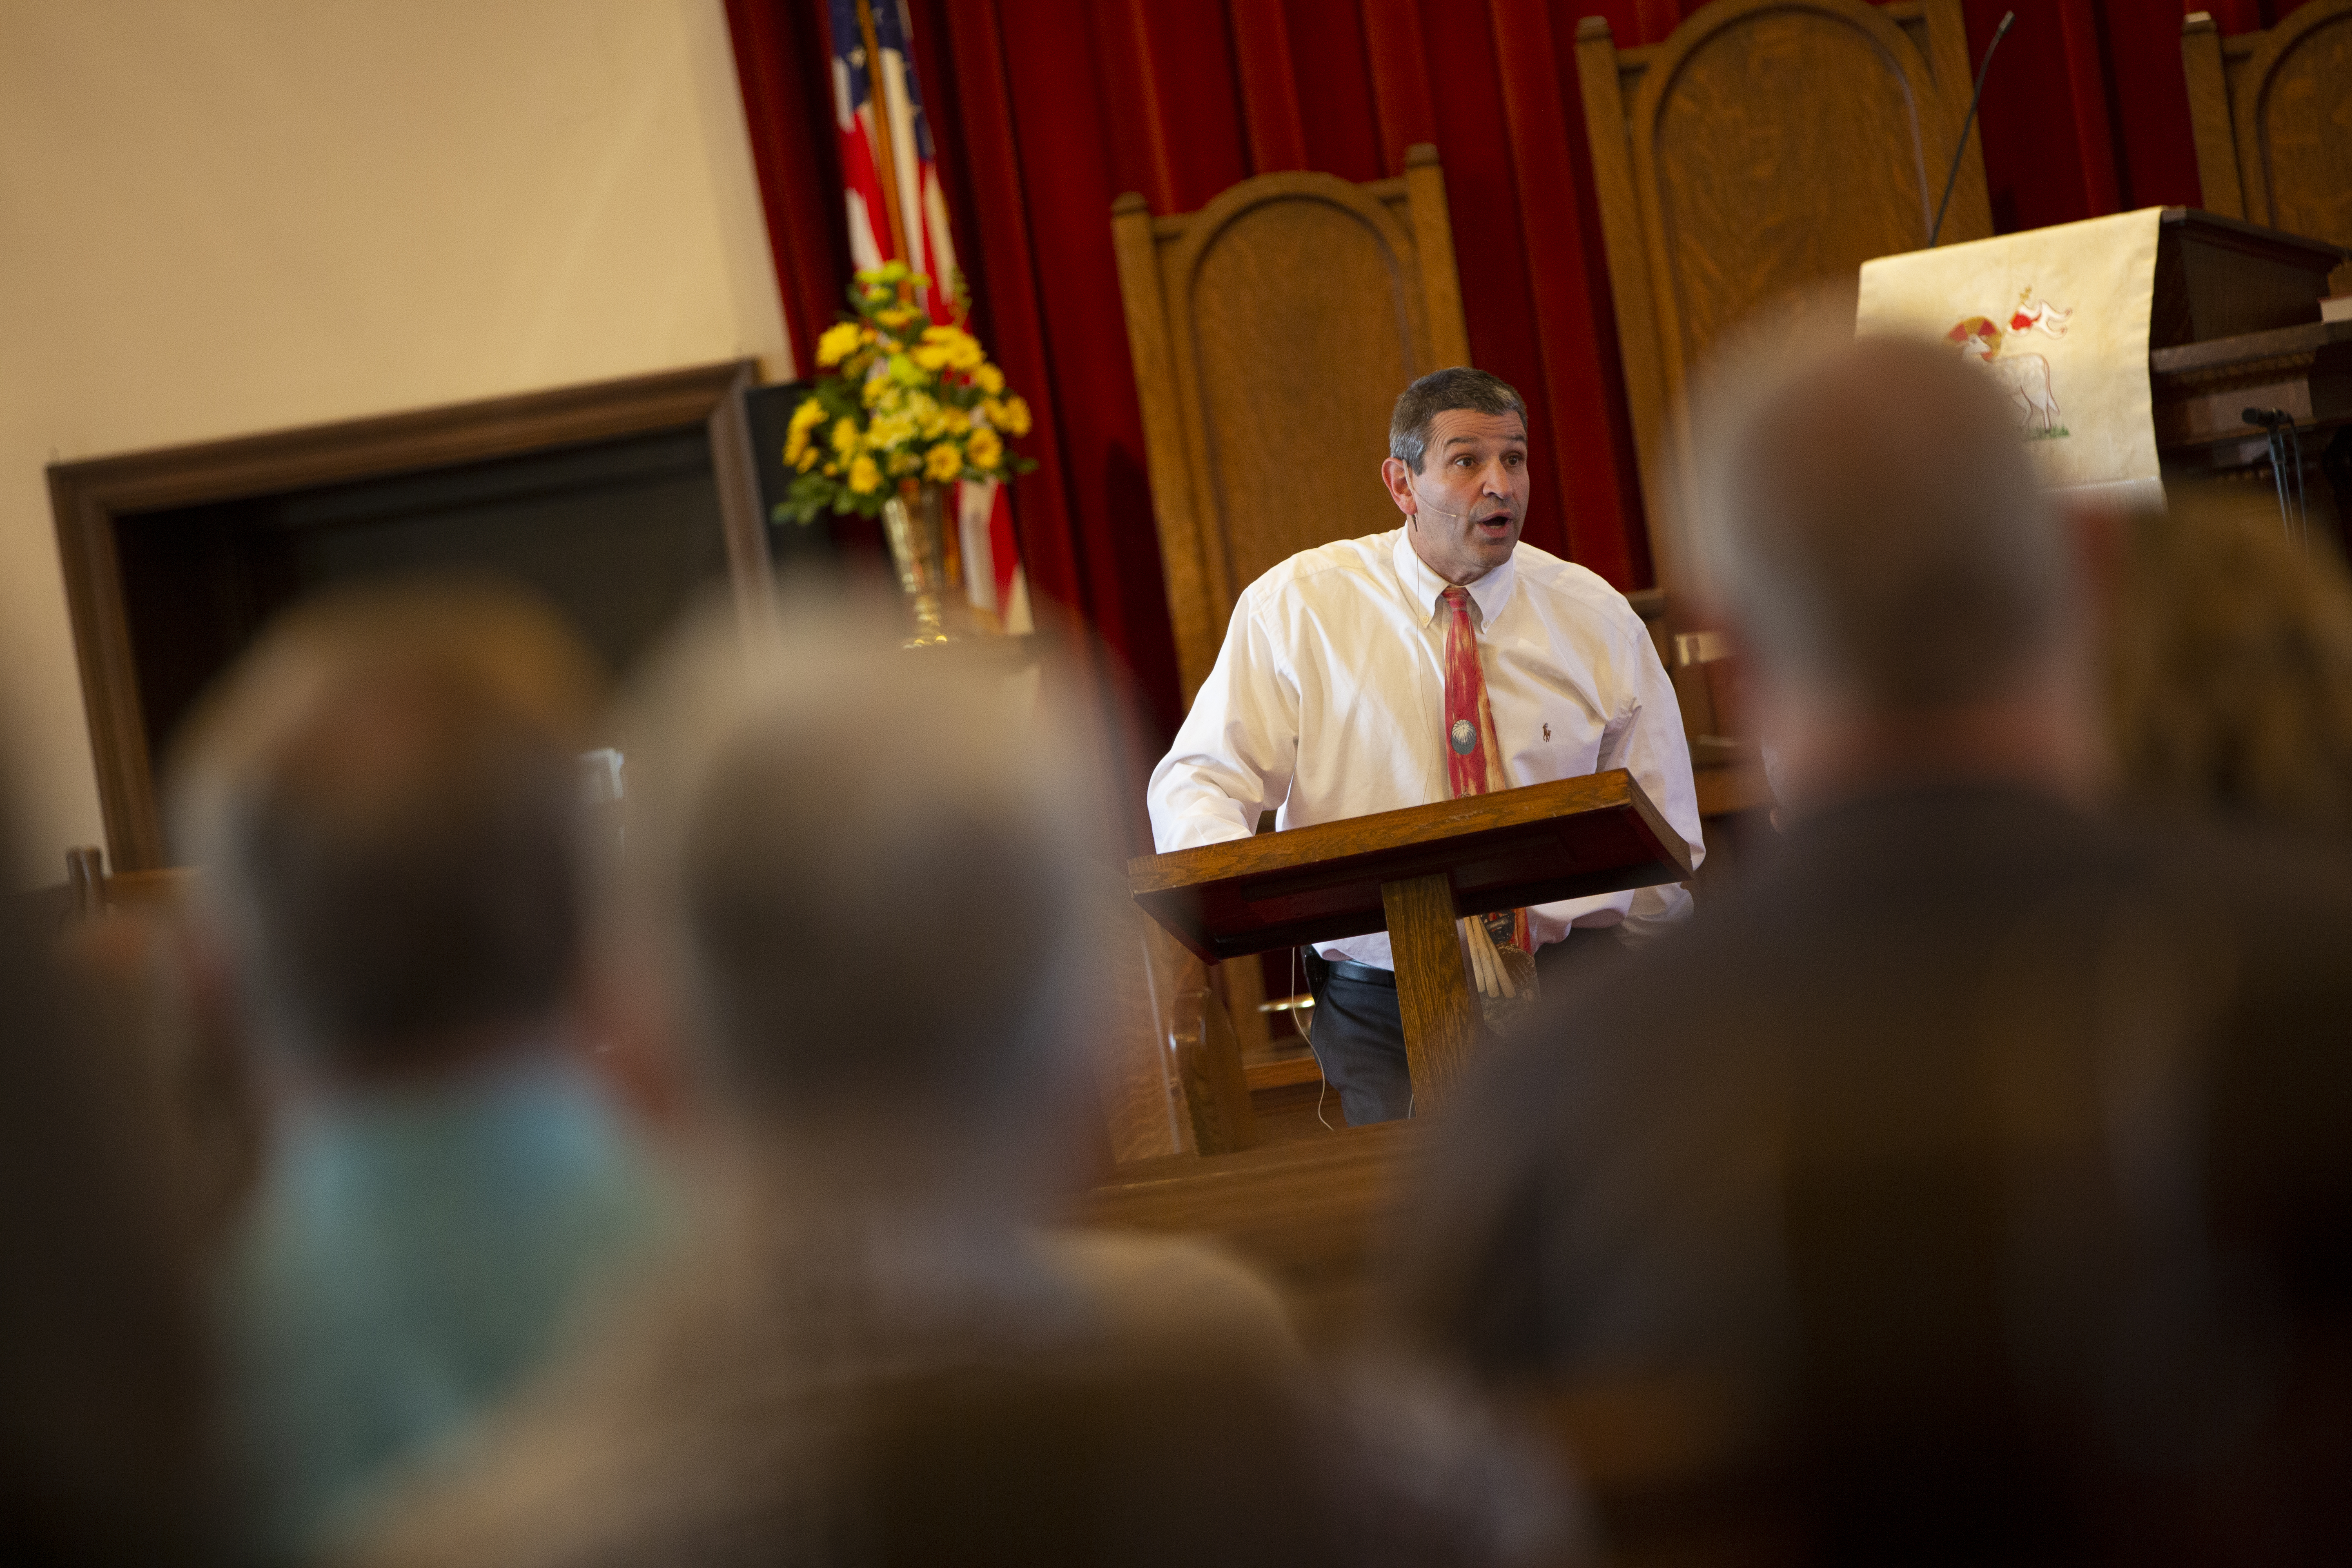 Pastor John Preaching - with congregation image